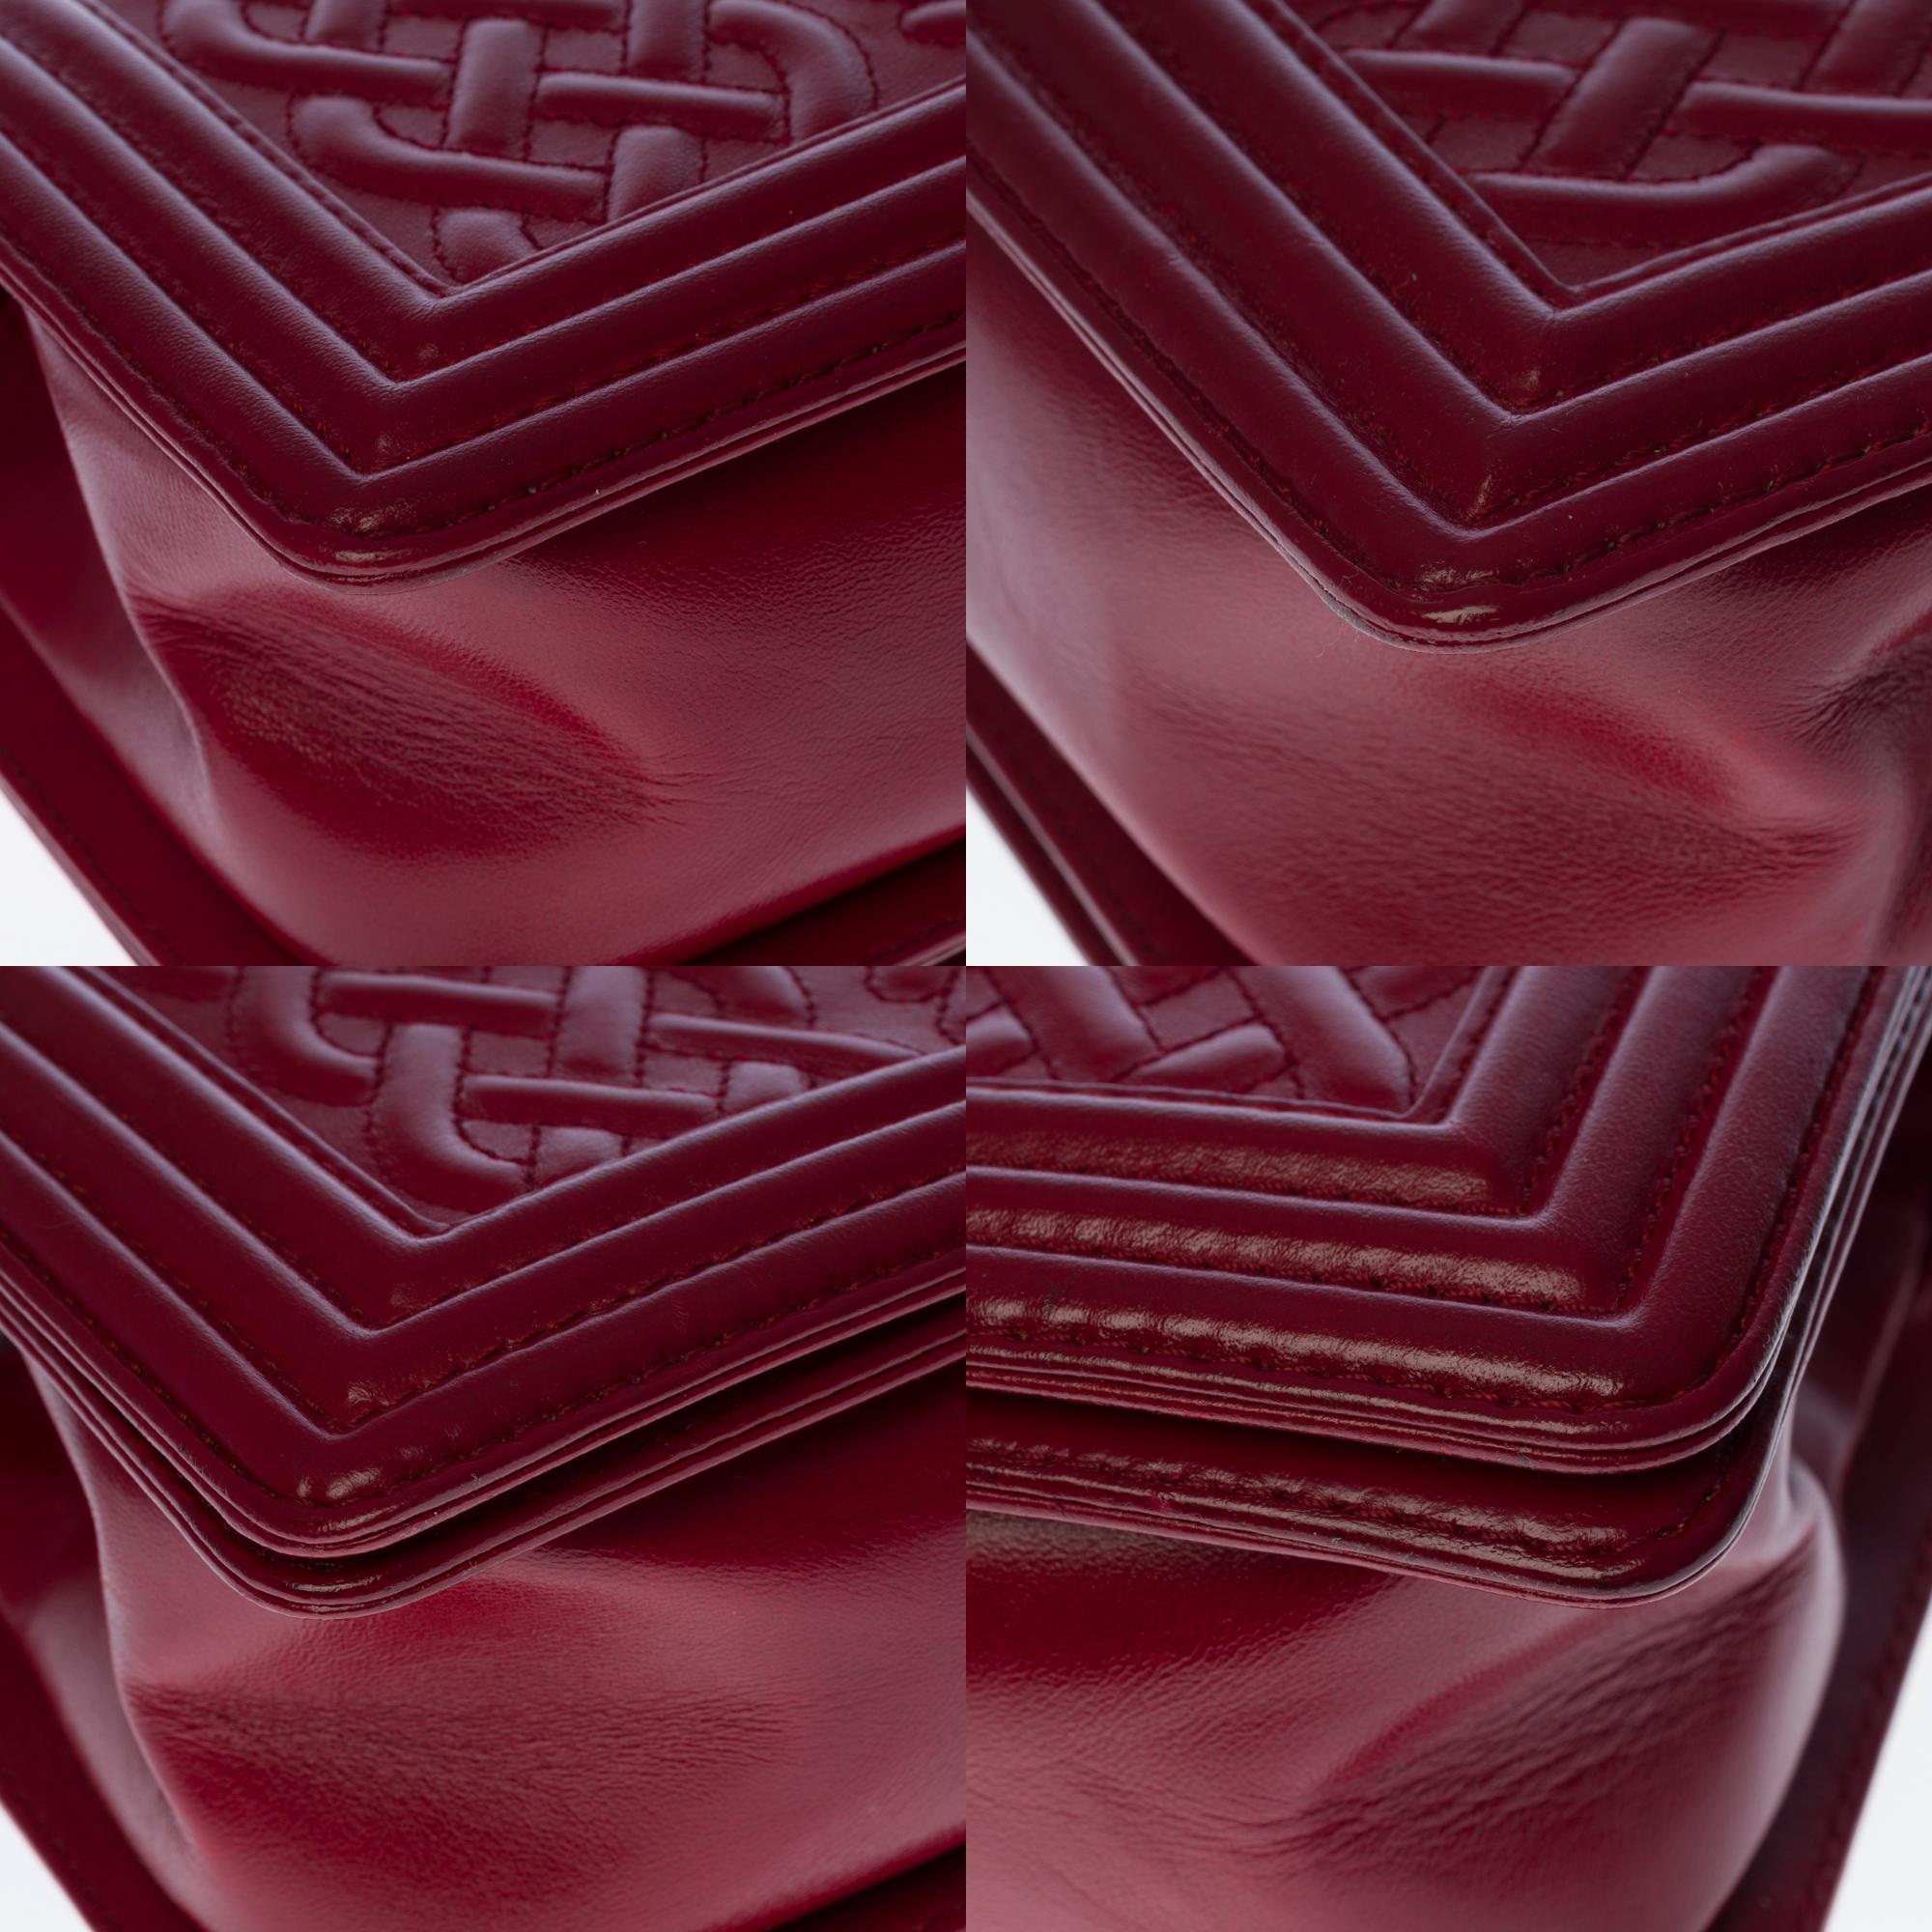 Limited Edition Chanel Boy Old medium shoulder bag in red embossed leather, SHW 3